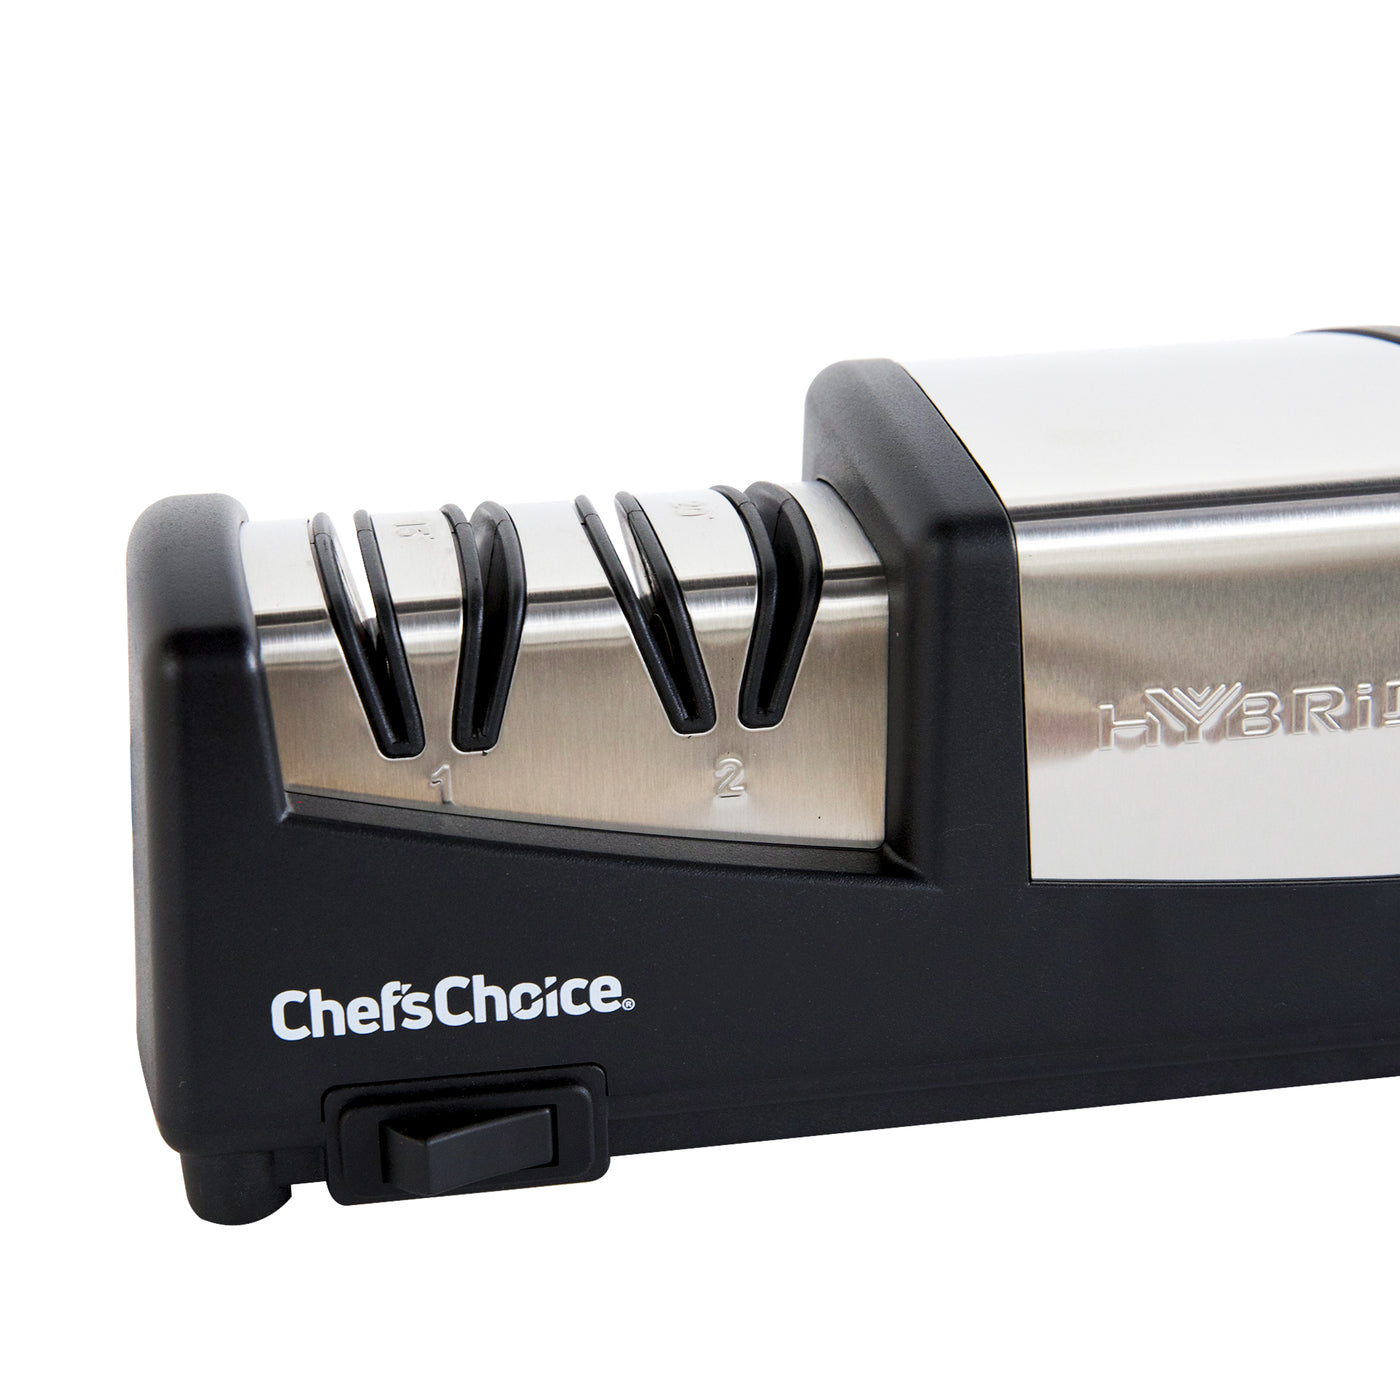 Chef's Choice Angle Select Diamond Hone Sharpener, Brushed Metal